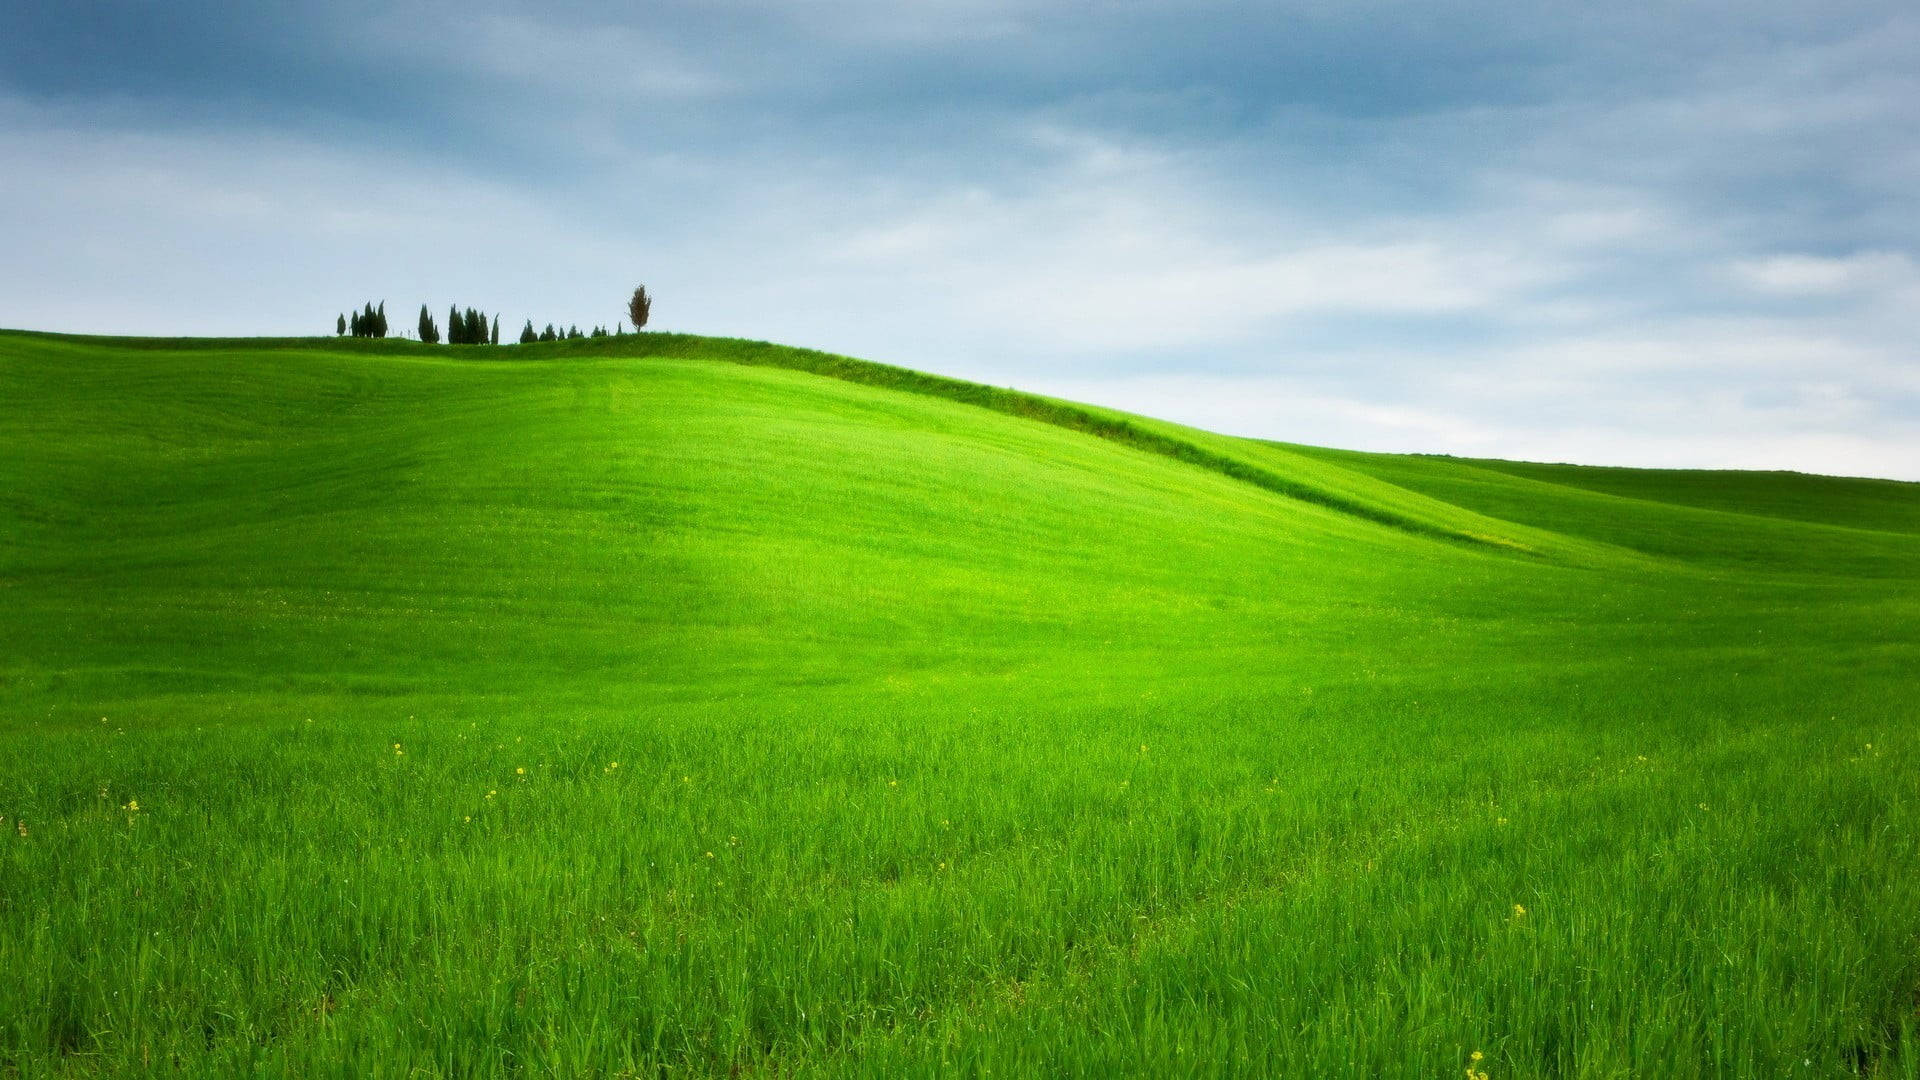 Grassy Green Hill